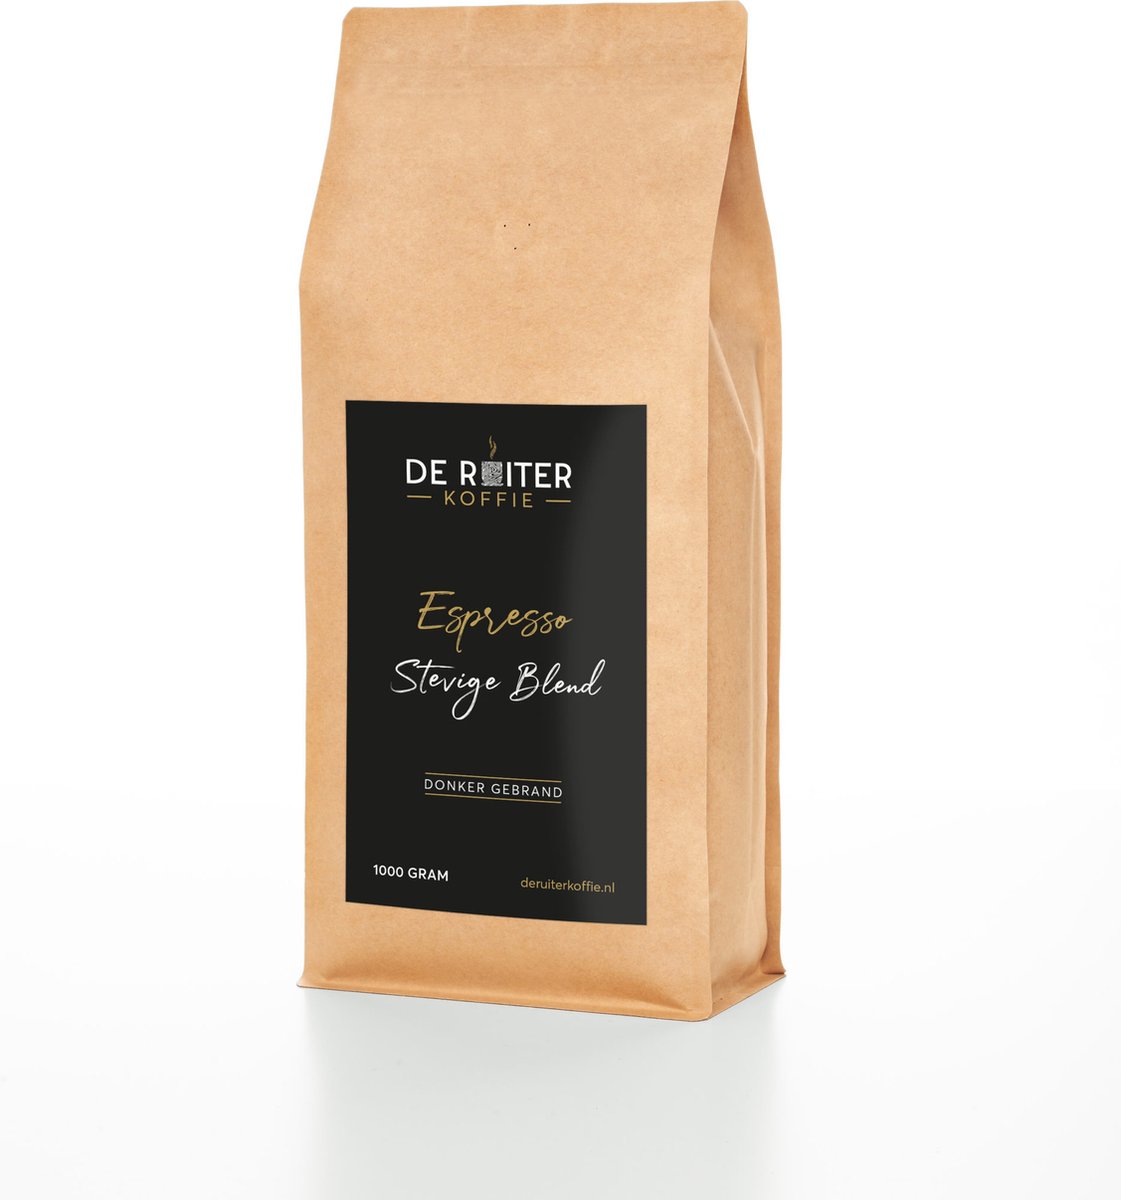 De Ruiter Koffie - Verse koffiebonen - Espresso - Stevige Blend - 1000 gram - Hele koffiebonen